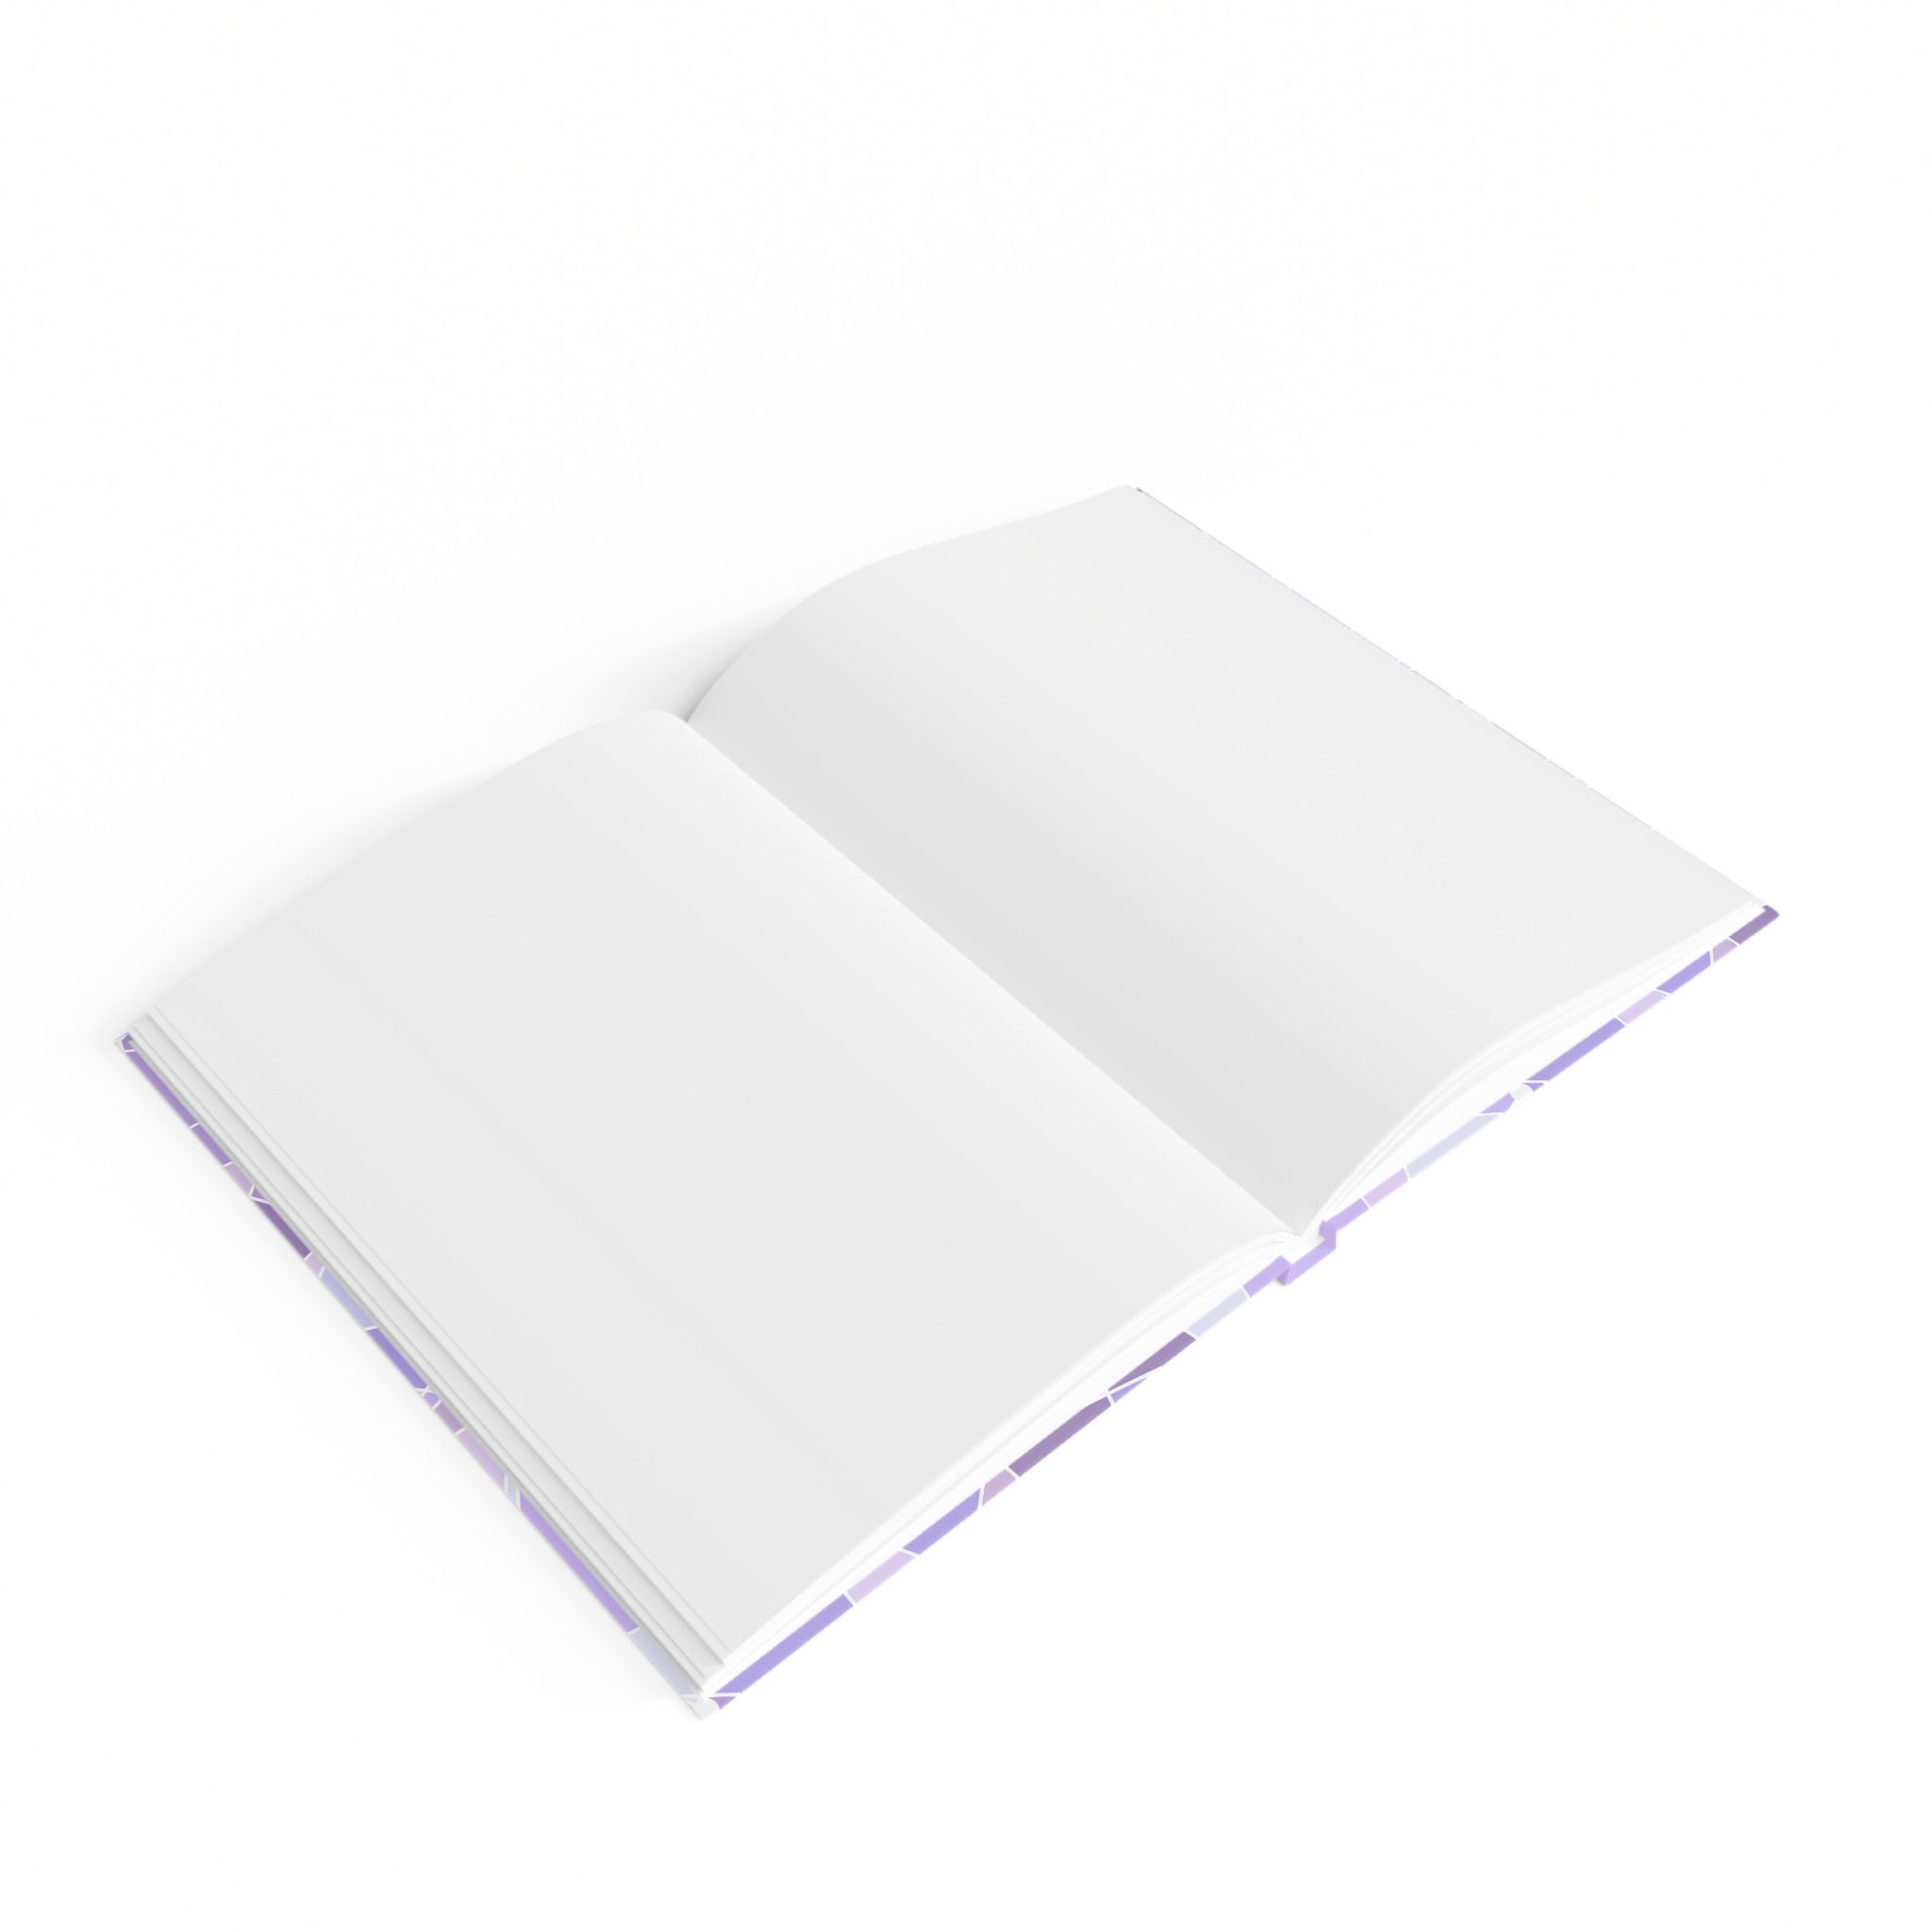 The Purple Wall Disney Hardcover Journal